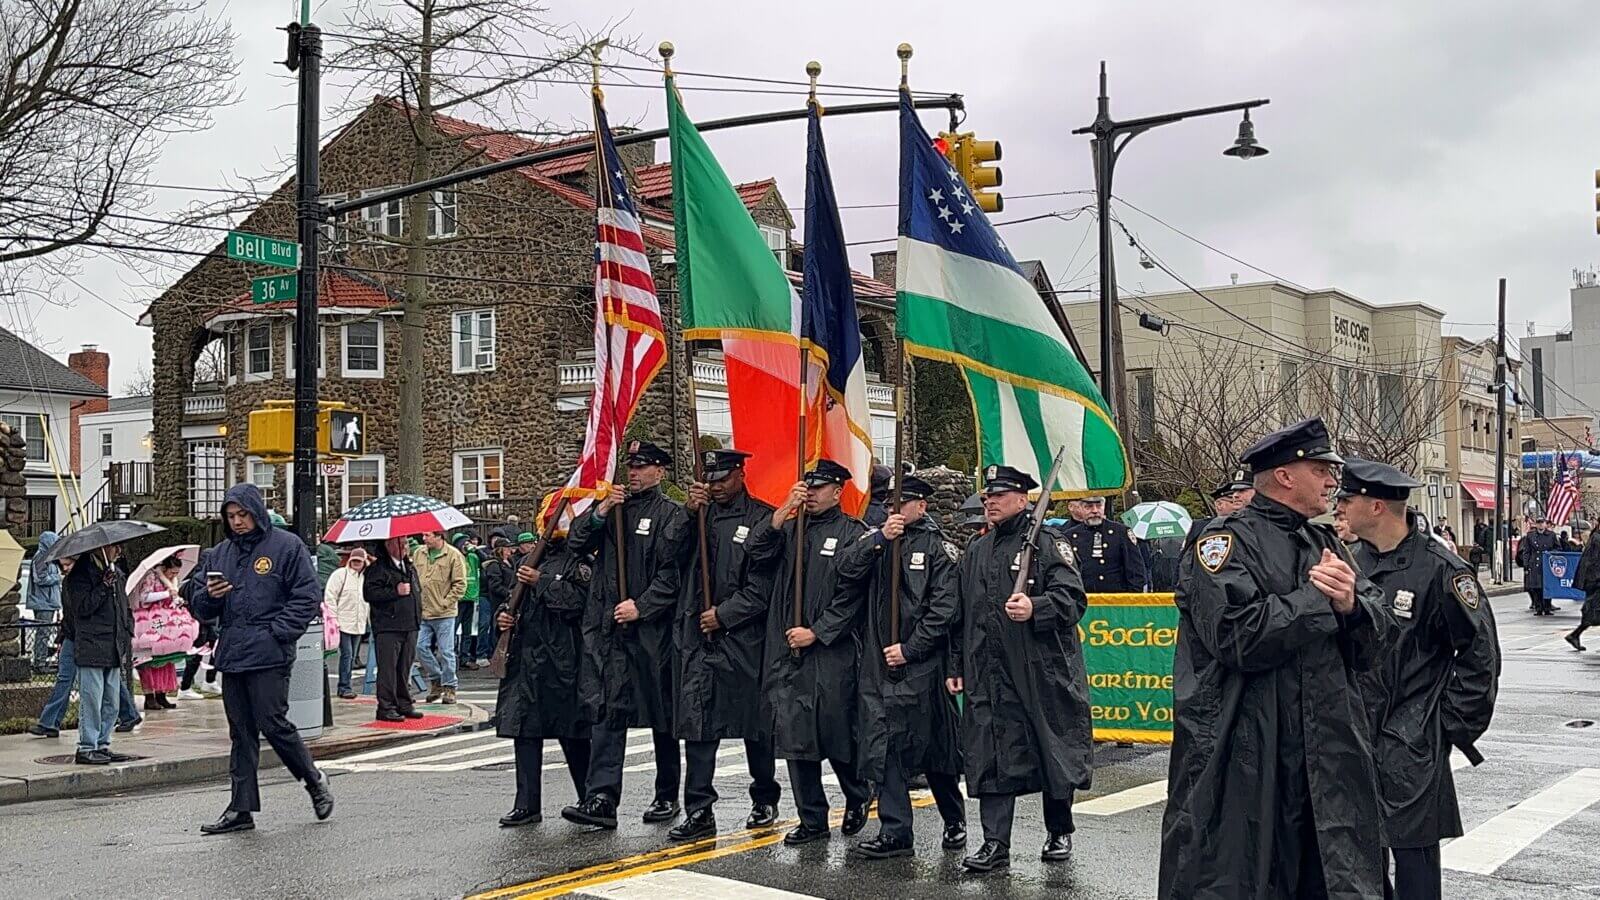 Revelers show their Irish pride at annual Bayside Saint Patrick’s Day